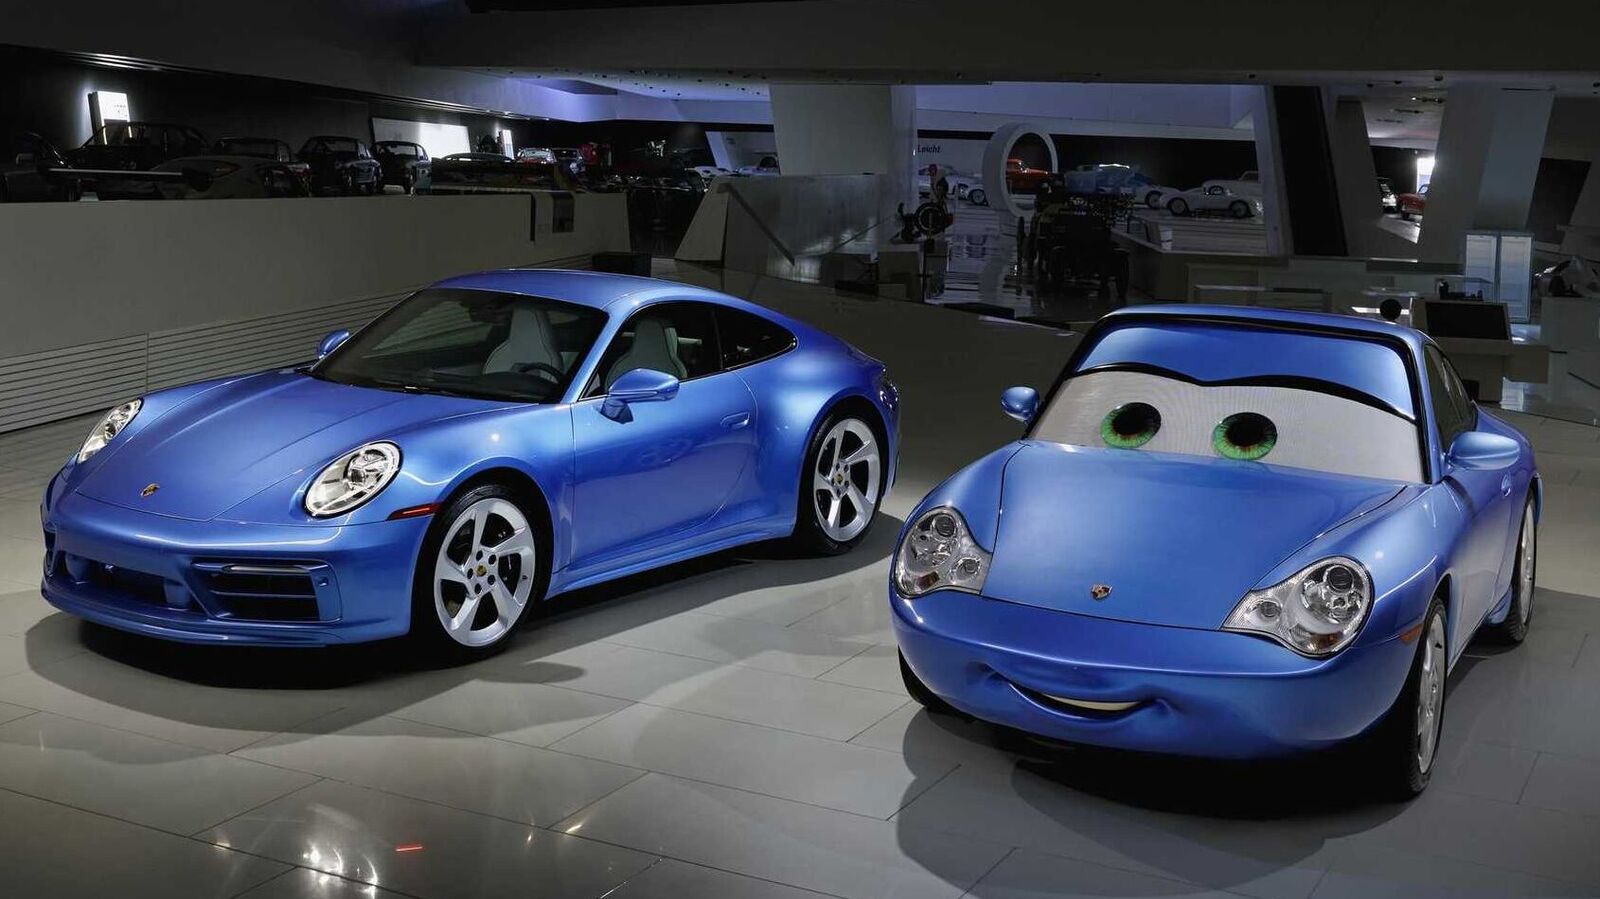 In pics: Porsche 911 Sally Carrera Edition brings the cartoon car to life |  HT Auto